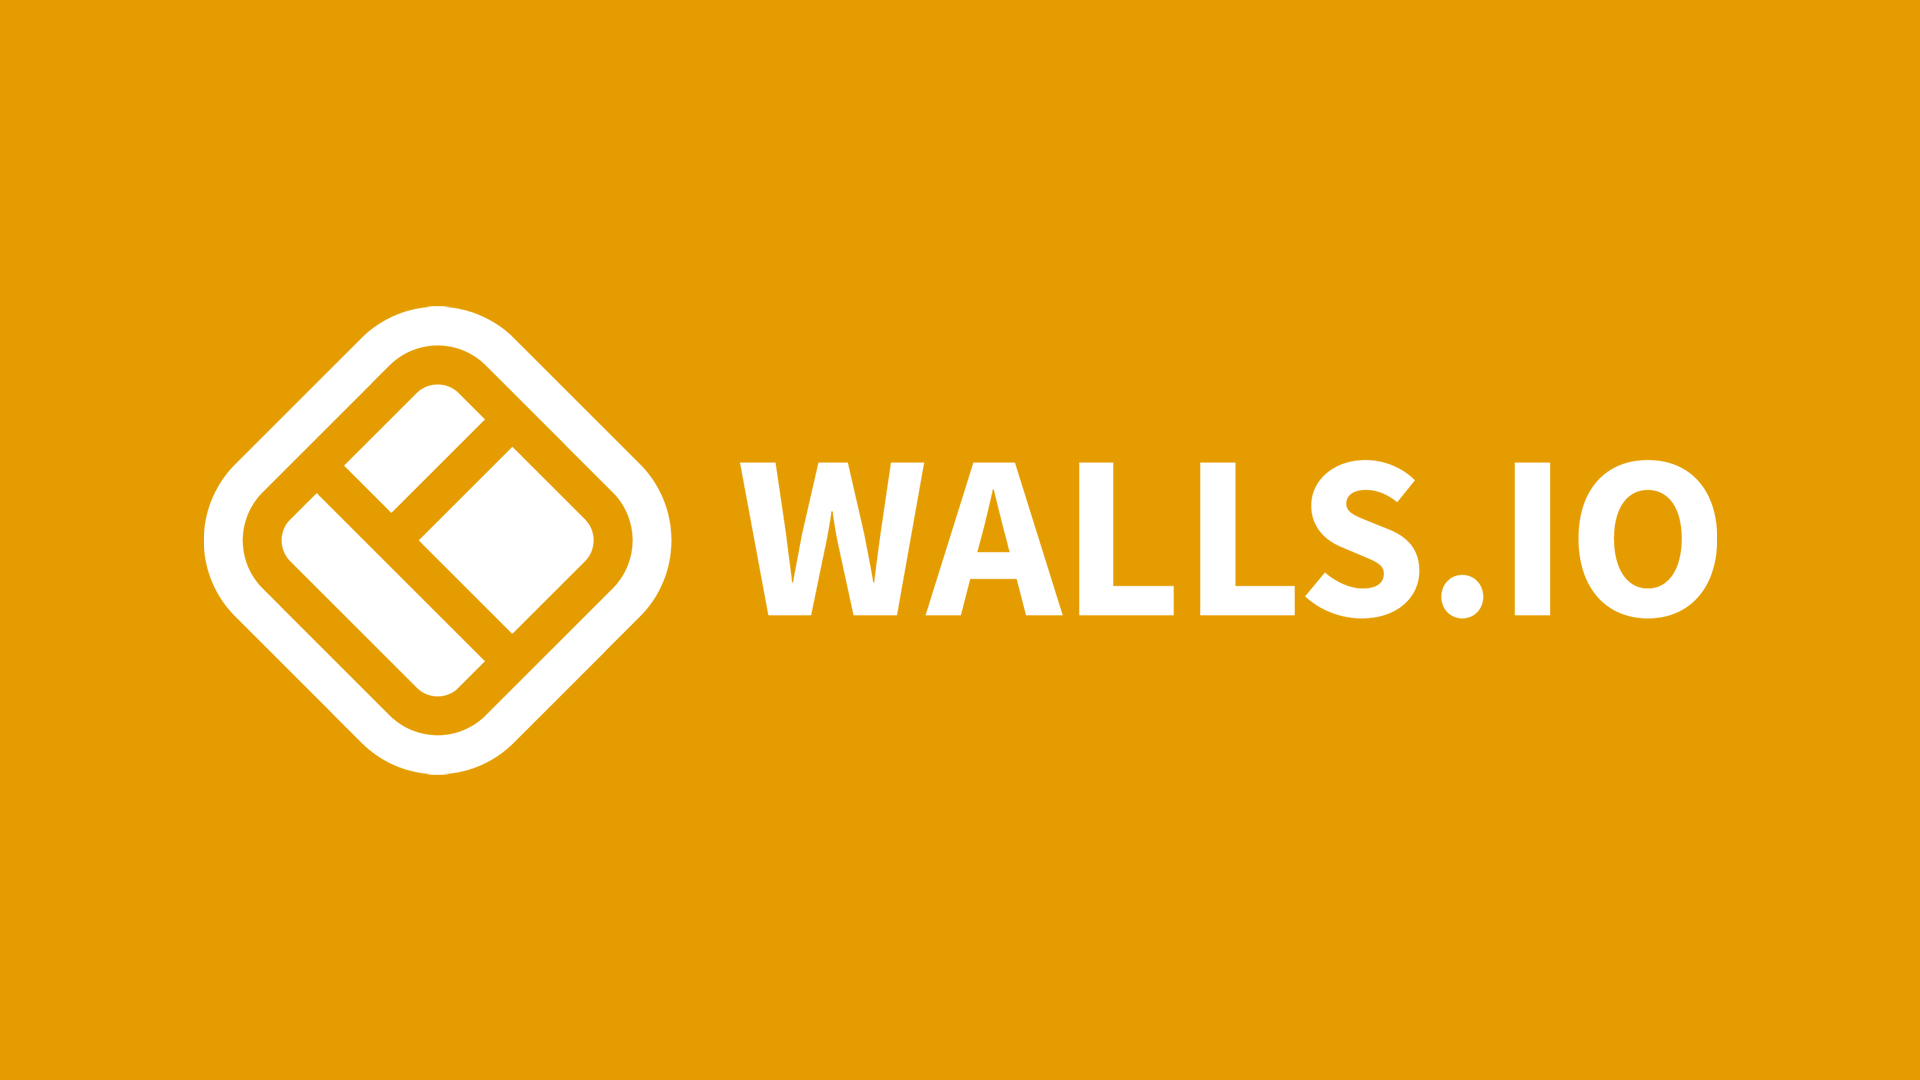 Die Socialisten: Walls.io. copy Die Socialisten